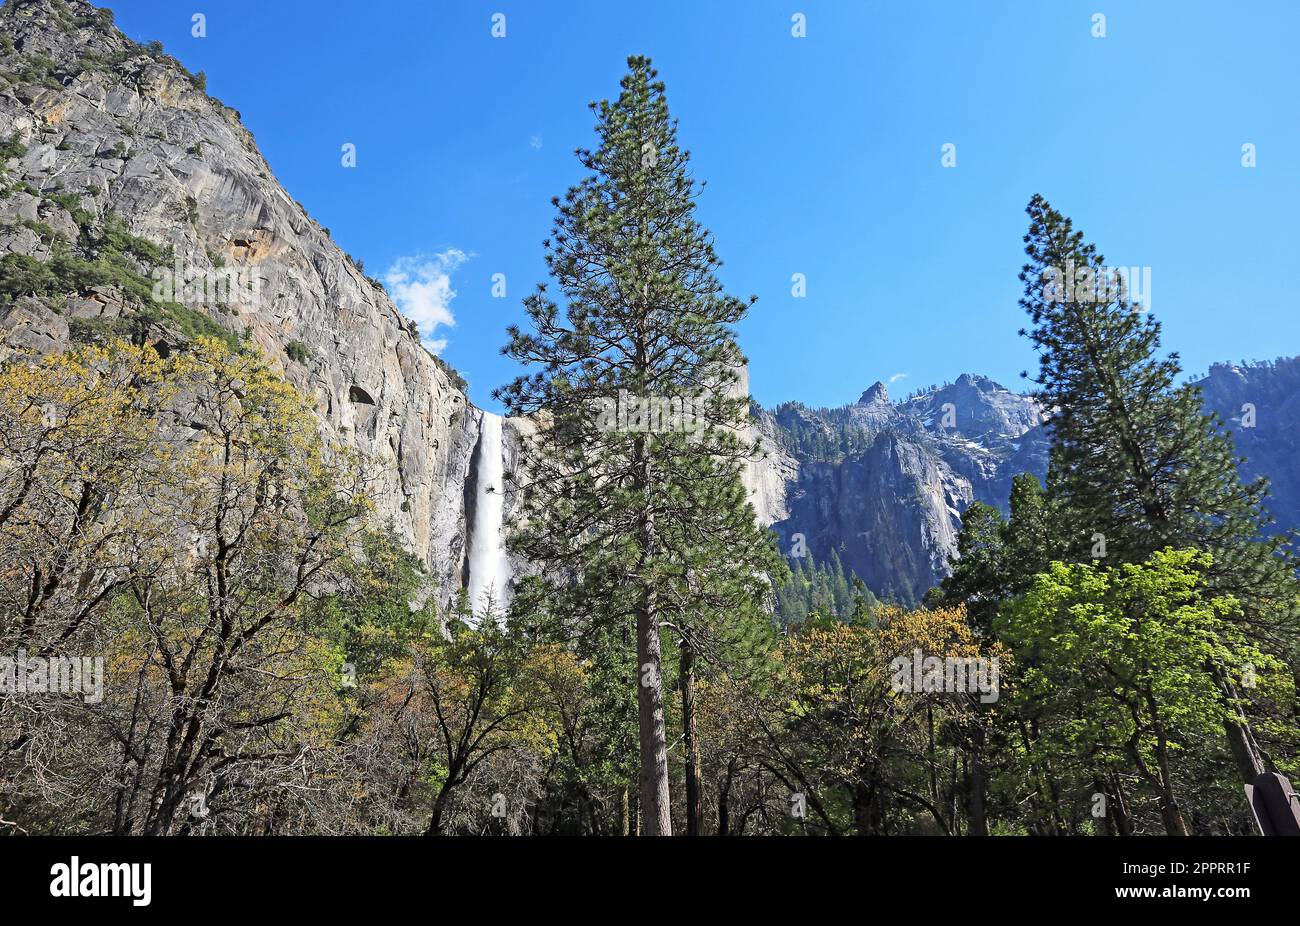 Two pine trees and waterfall - Yosemite National Park, California Stock Photo